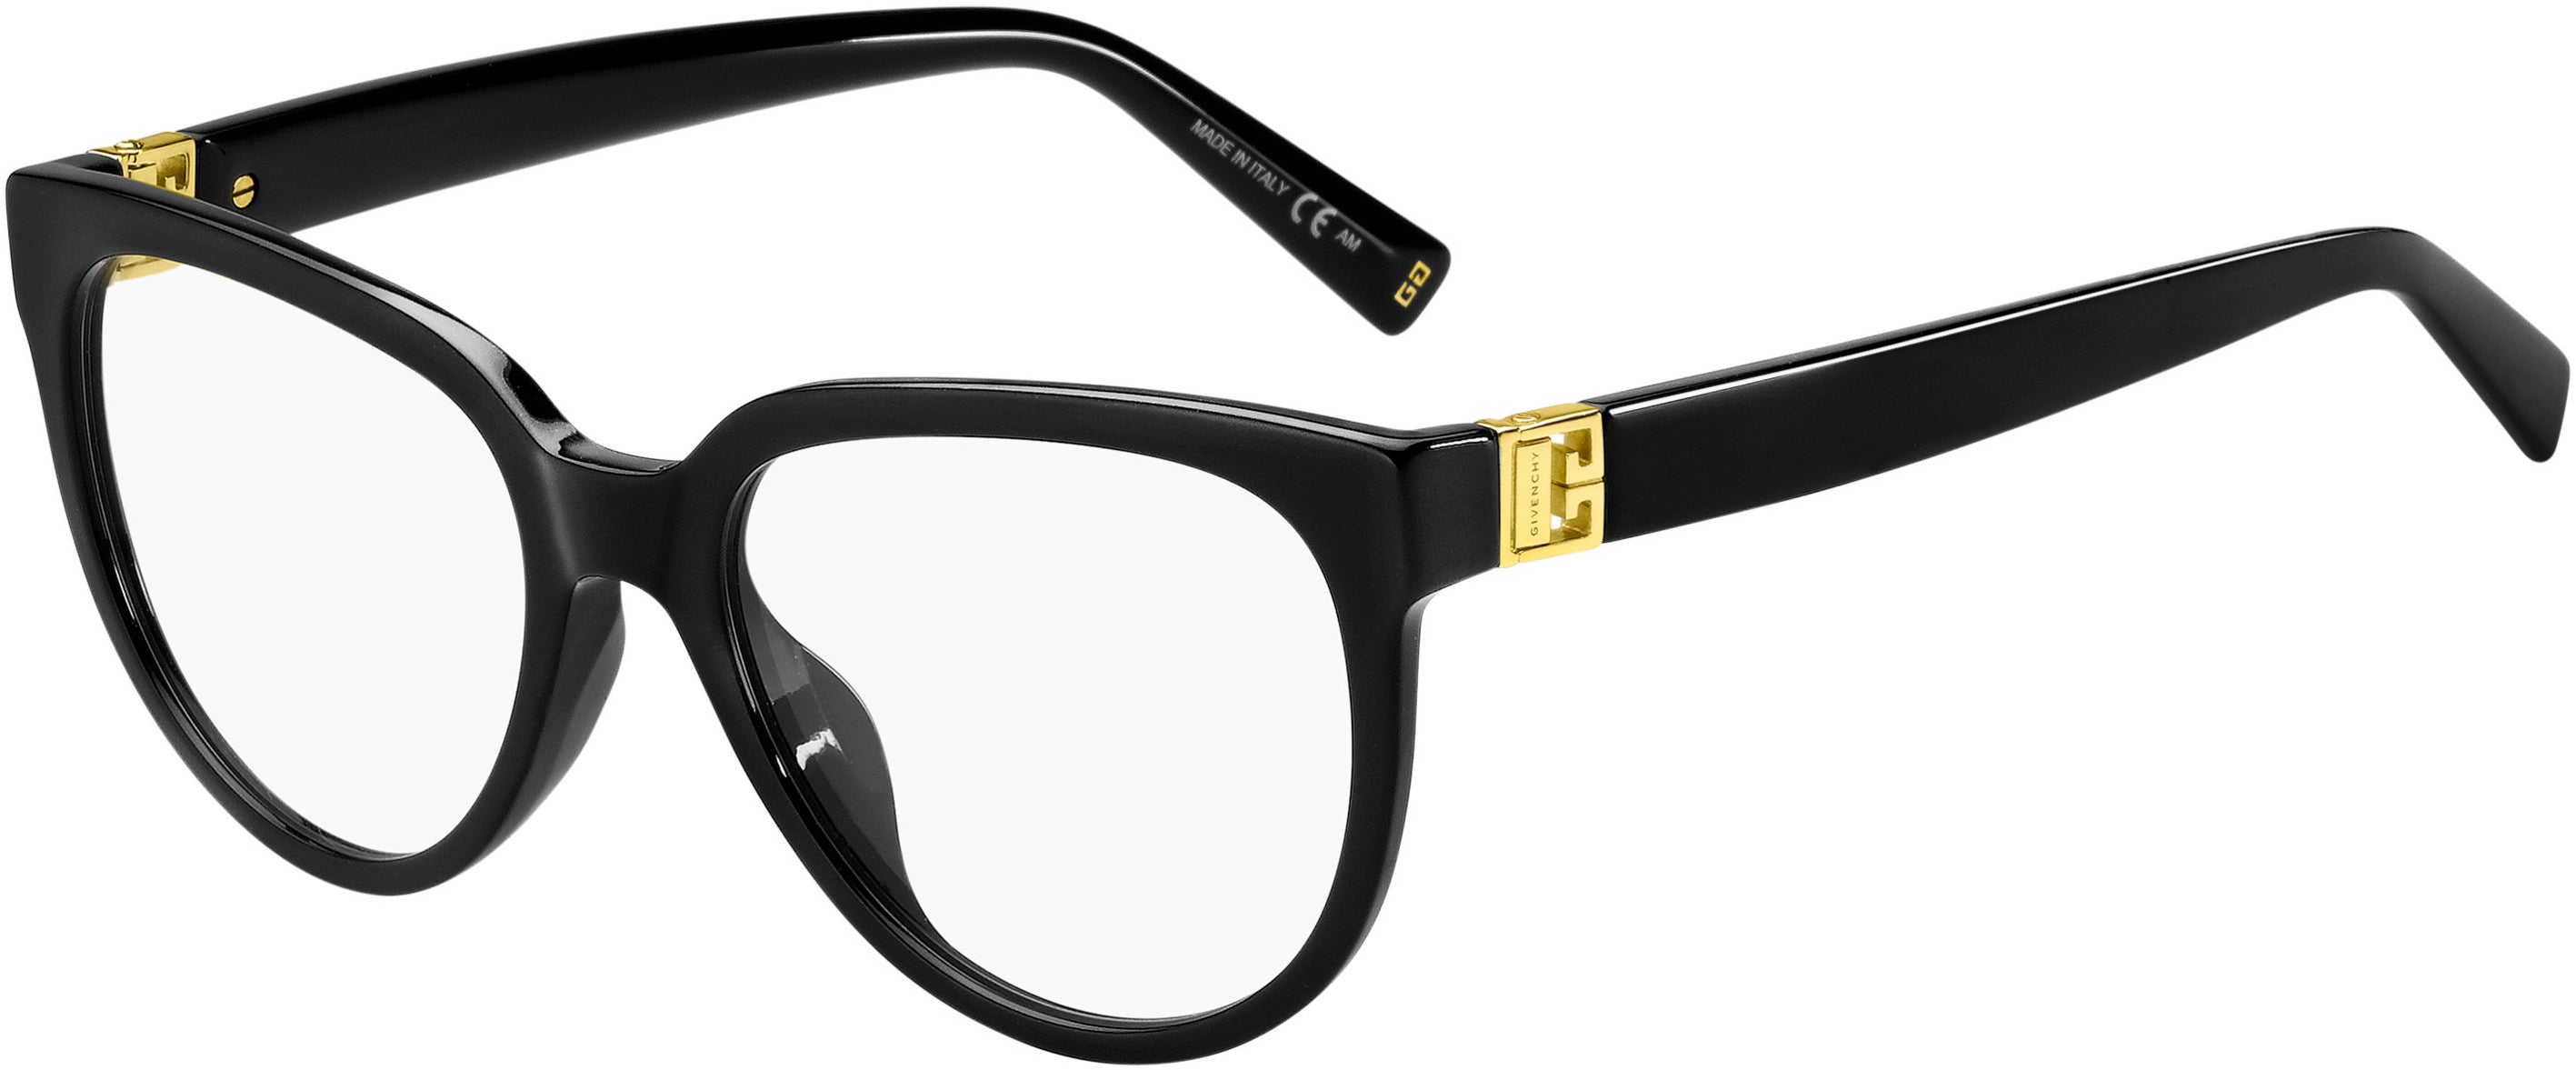  Givenchy 0119/G Oval Modified Eyeglasses 0807-0807  Black (00 Demo Lens)